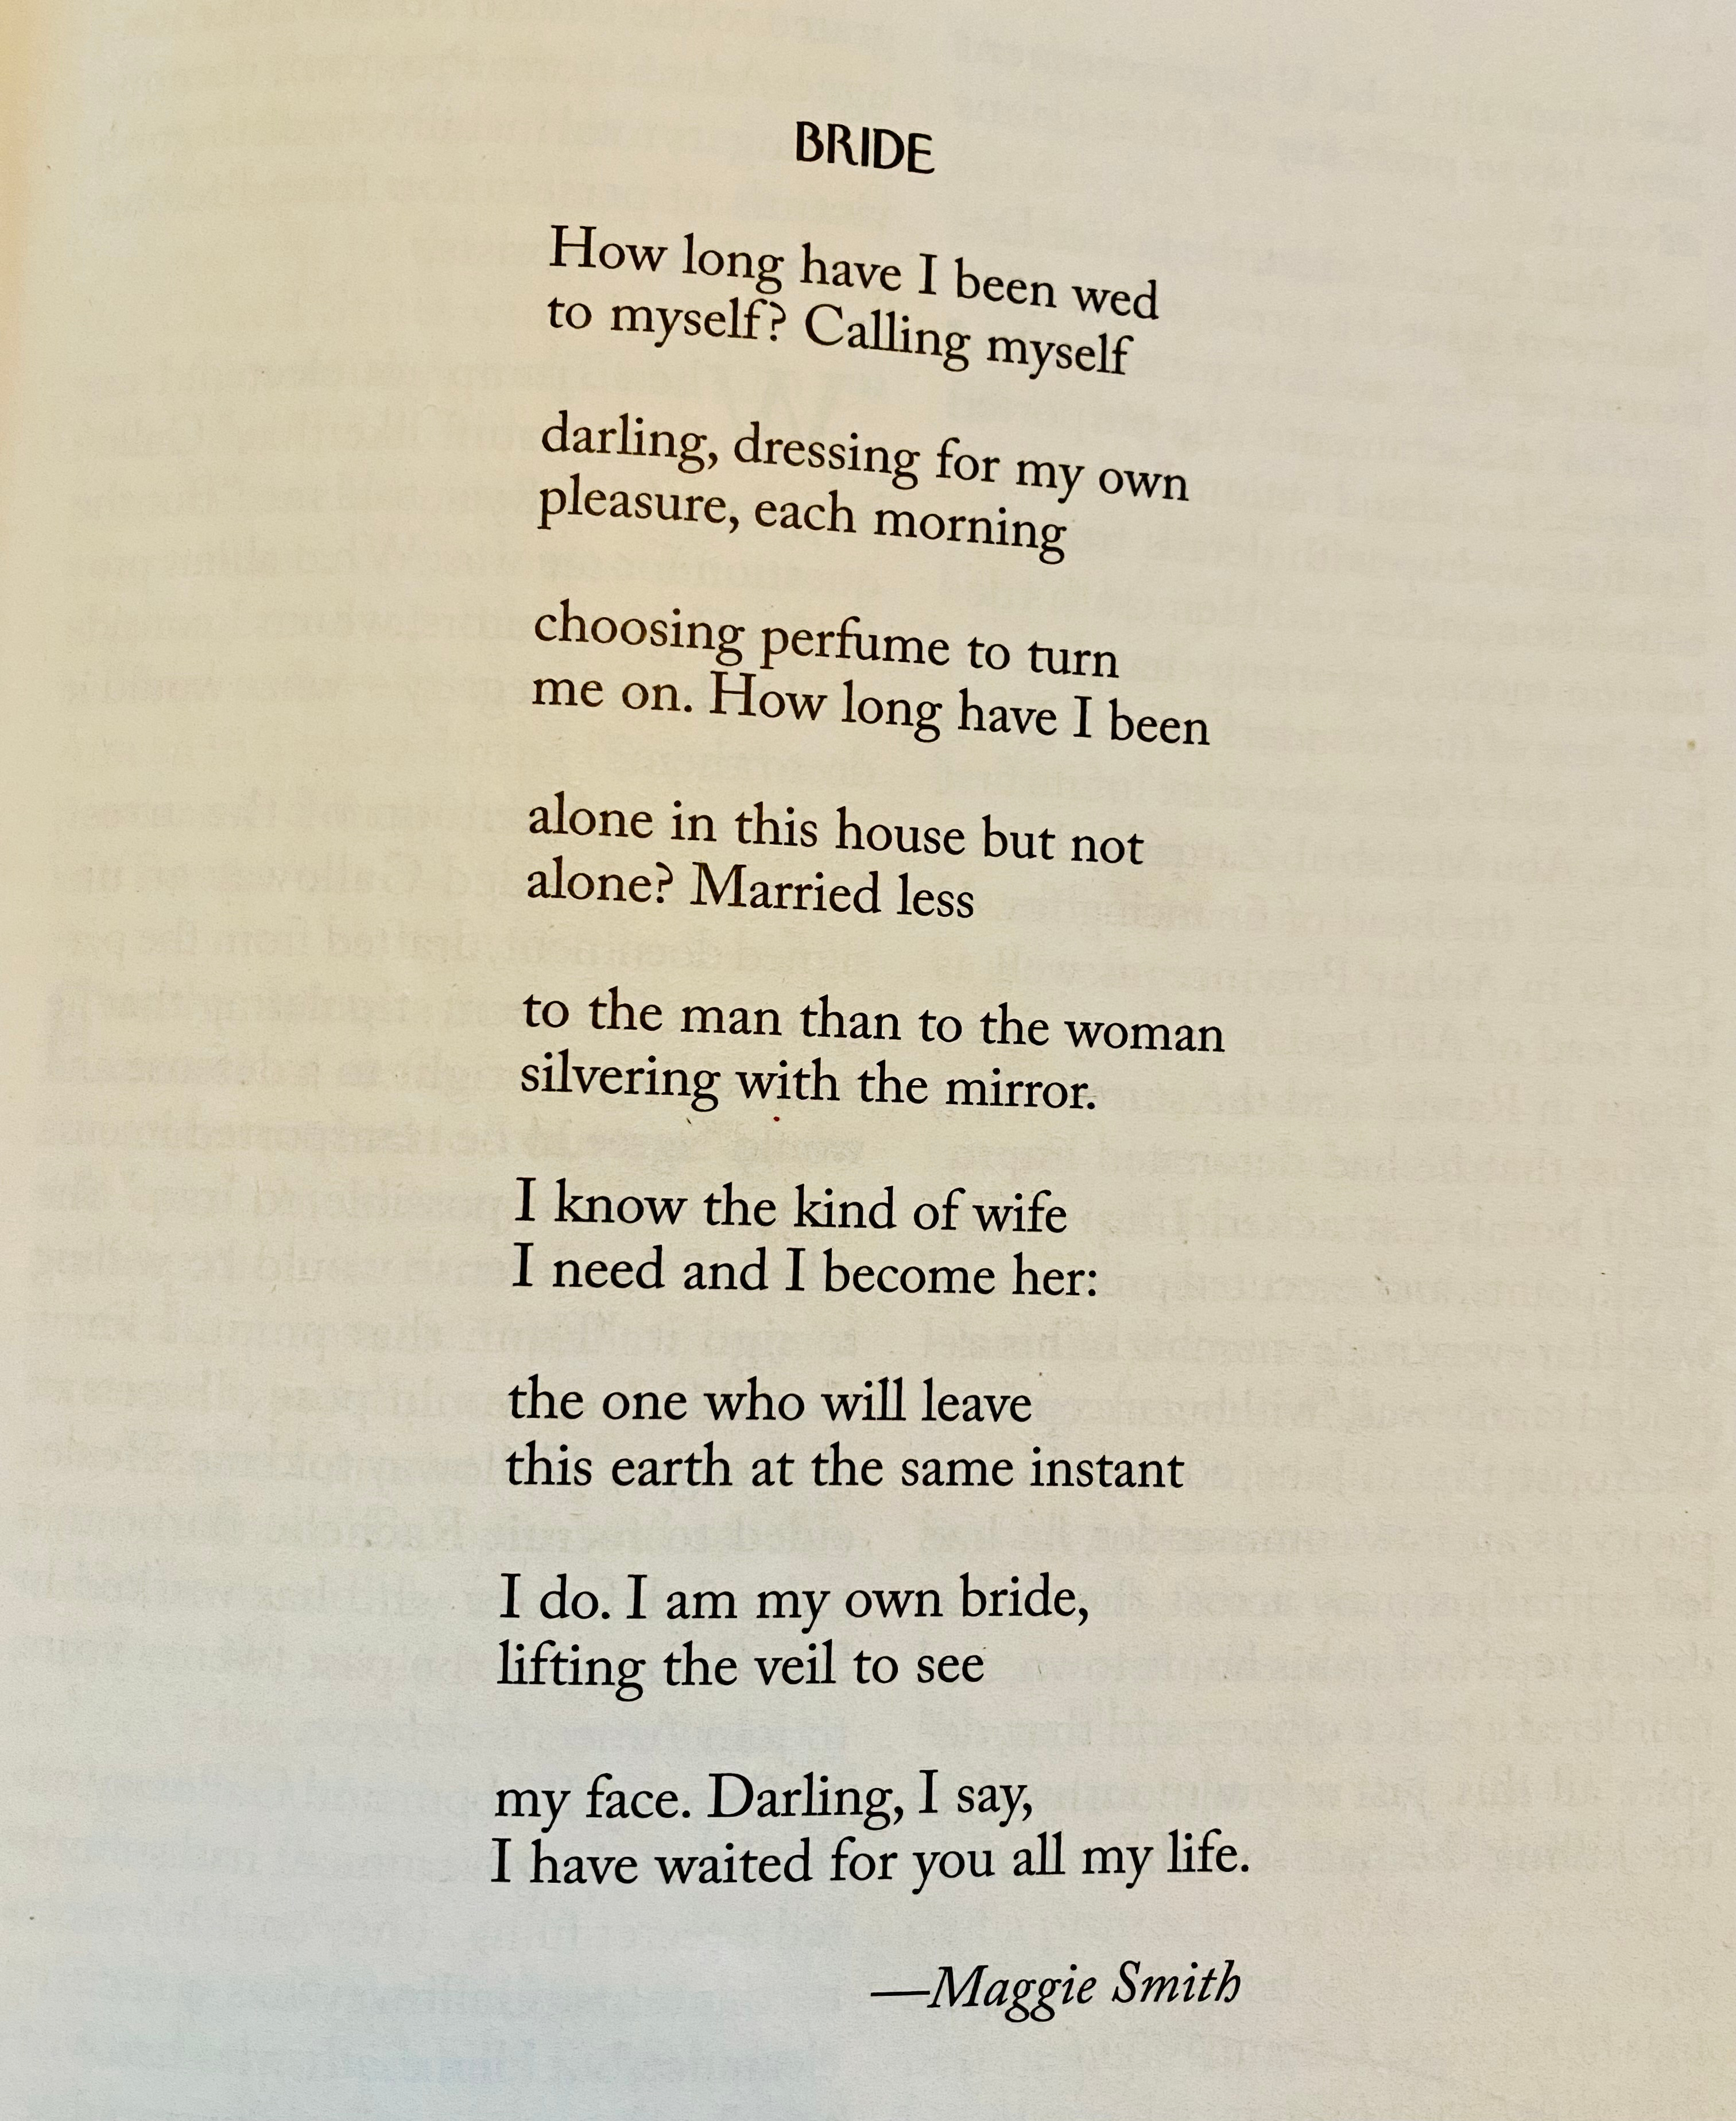 A Piece of me - A Poem